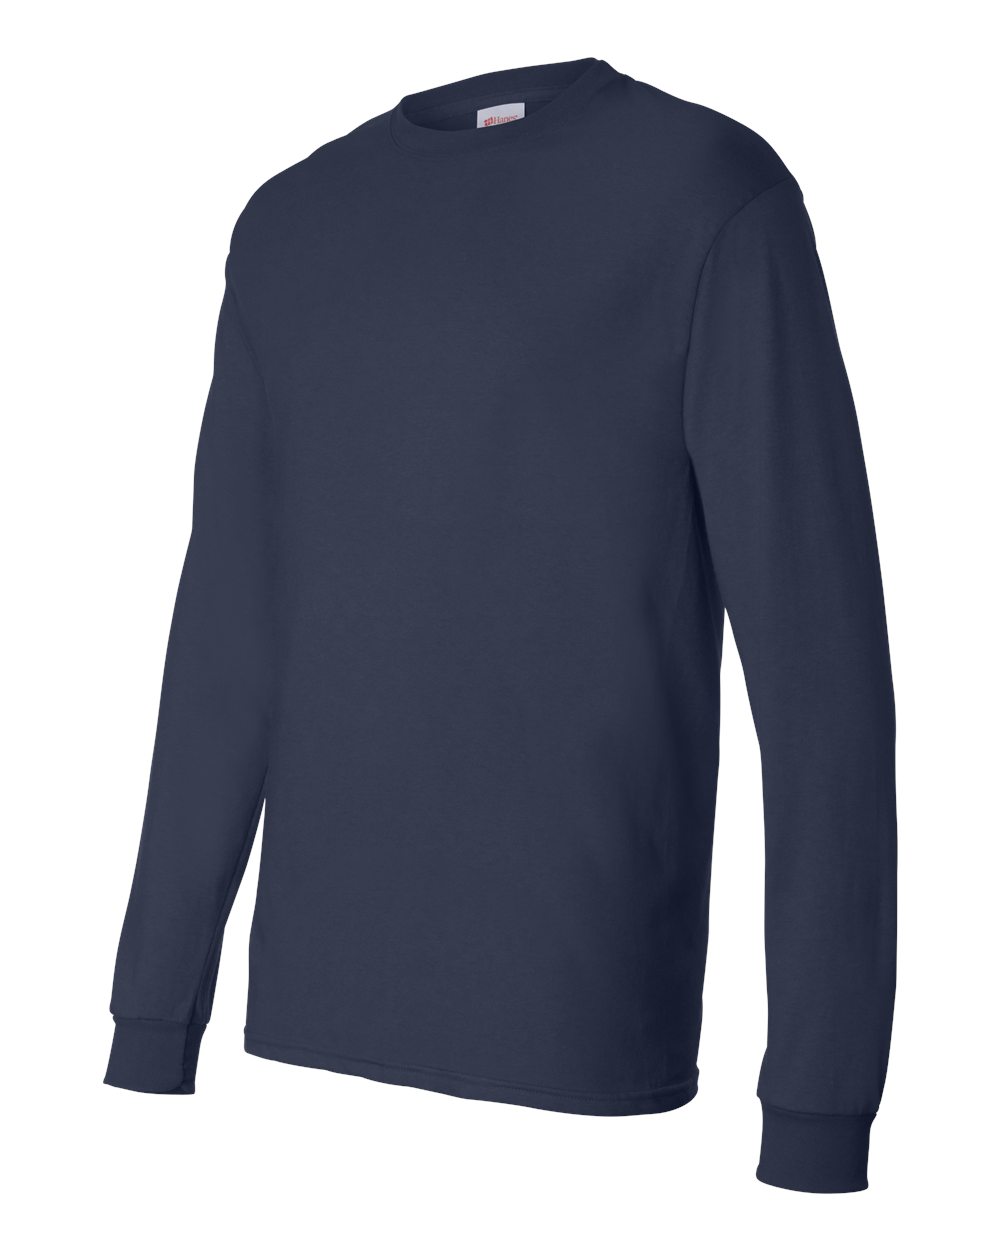 5286 ComfortSoft Cotton Long-Sleeve T-Shirt Hanes Mens 5.2 oz